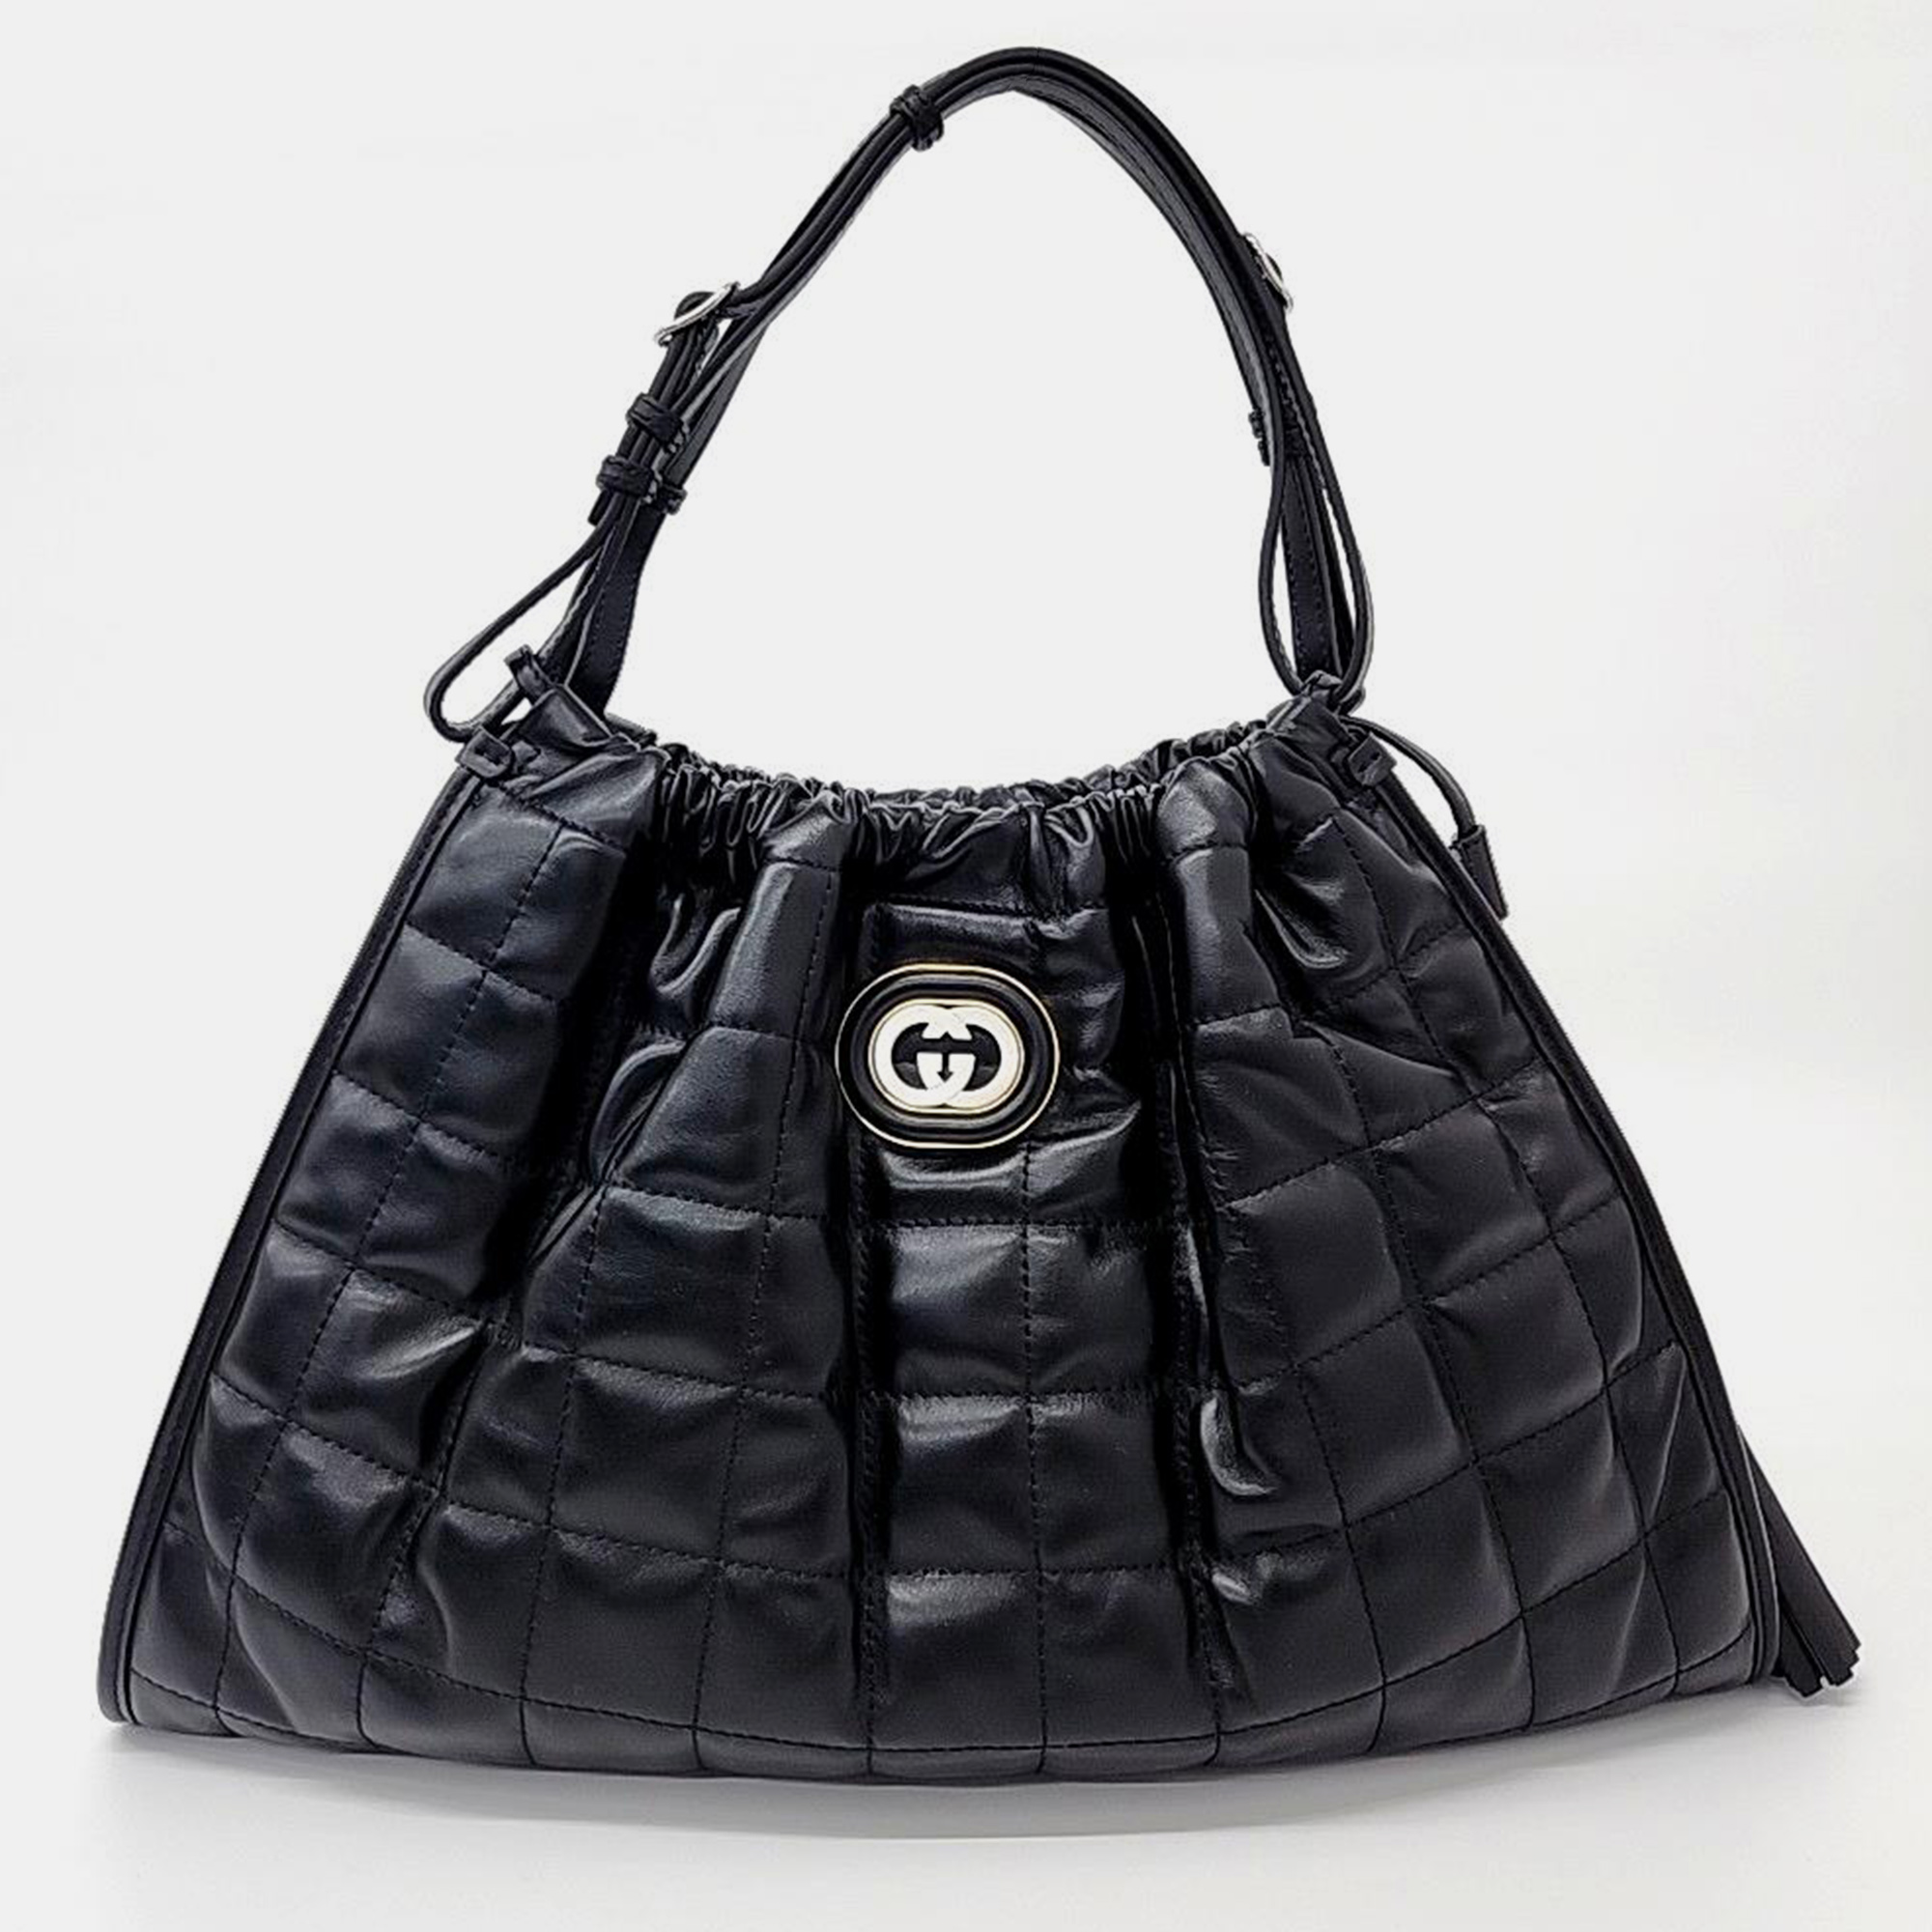 Gucci deco medium tote handbag (746210)